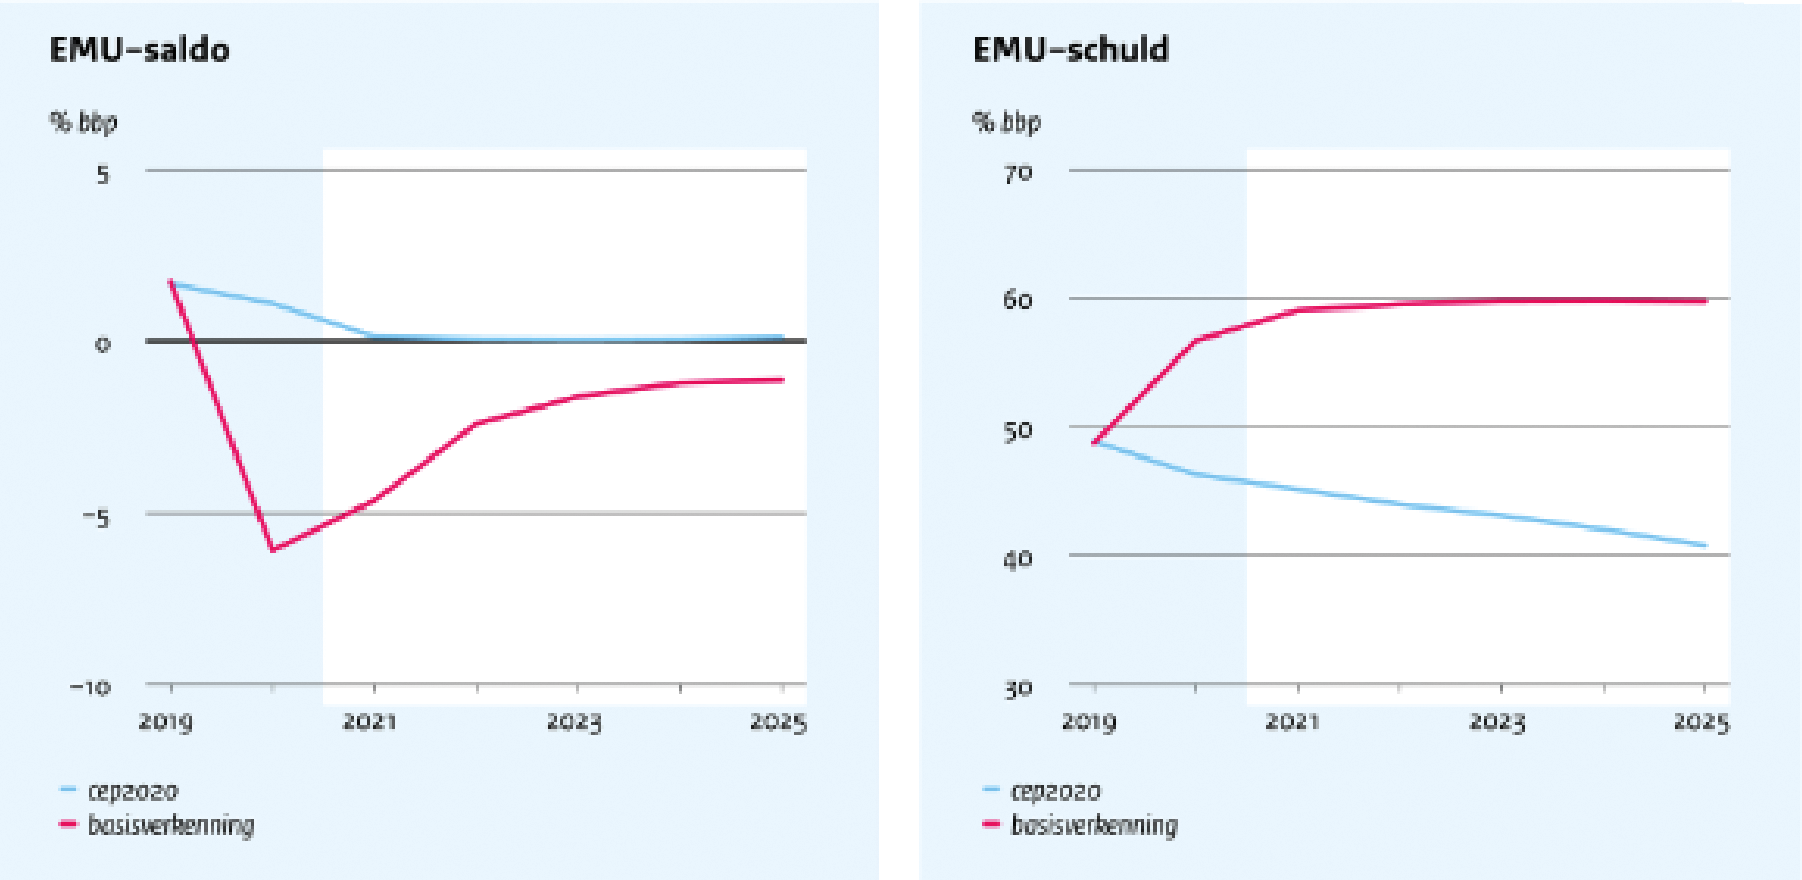 Figuur 3a en 3b: EMU-saldo en EMU-schuld 2020–2025